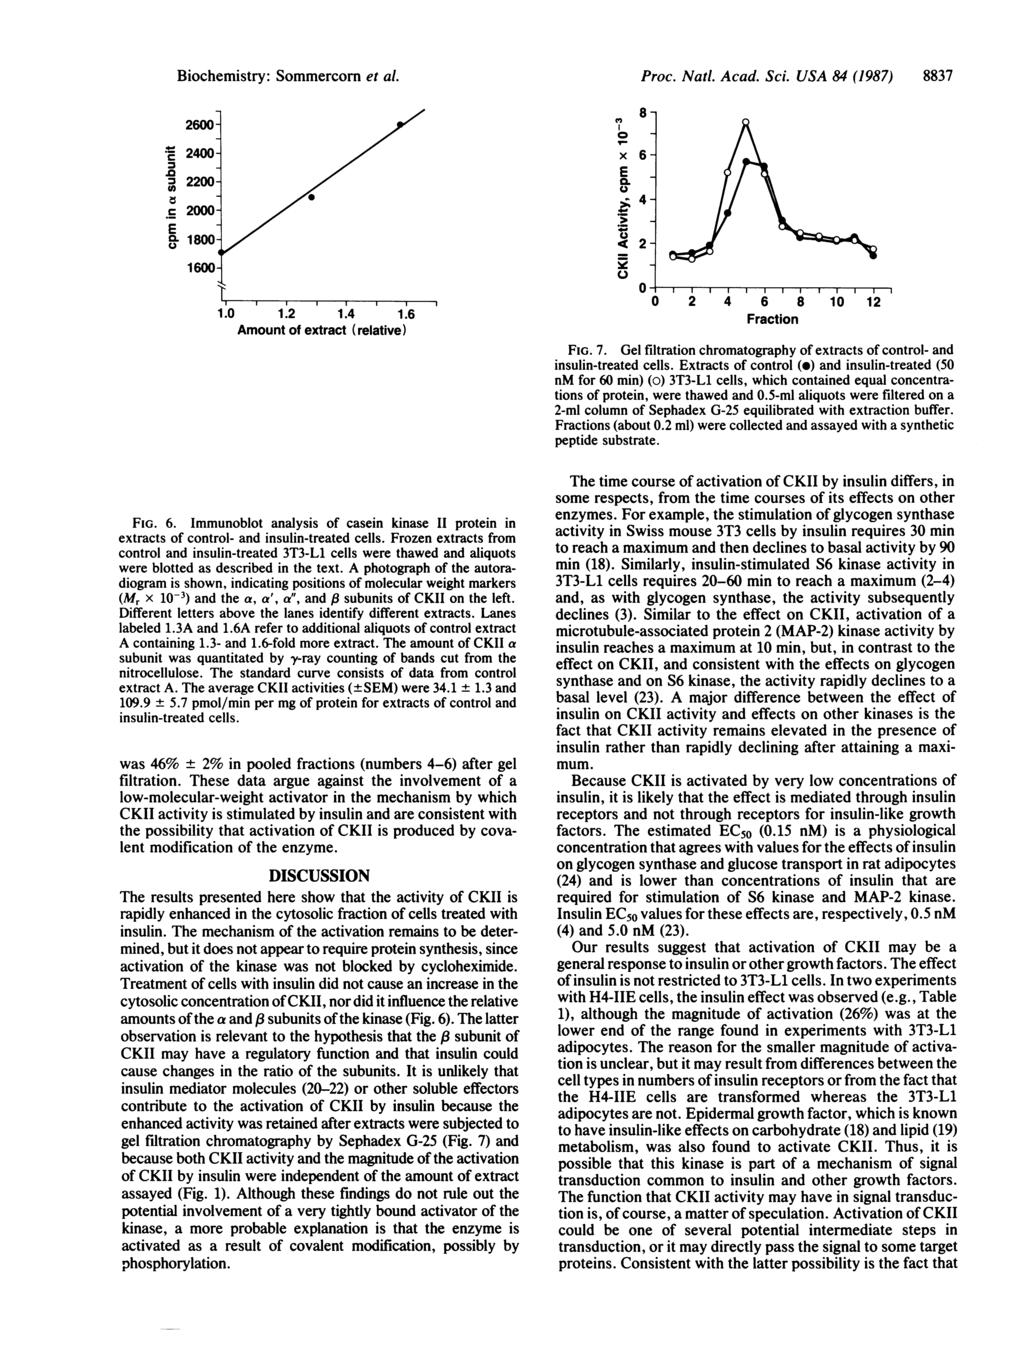 26- F 24-. 3 22- co rr -b IX -~ 16-43- 25.7- Biochemistry: Sommercorn et al. c 2- E - - 18-1. 1.2 1.4 1.6 Amount of extract (relative) Control Insulin 1.6A 1.3A A B C A B C FIG. 6.